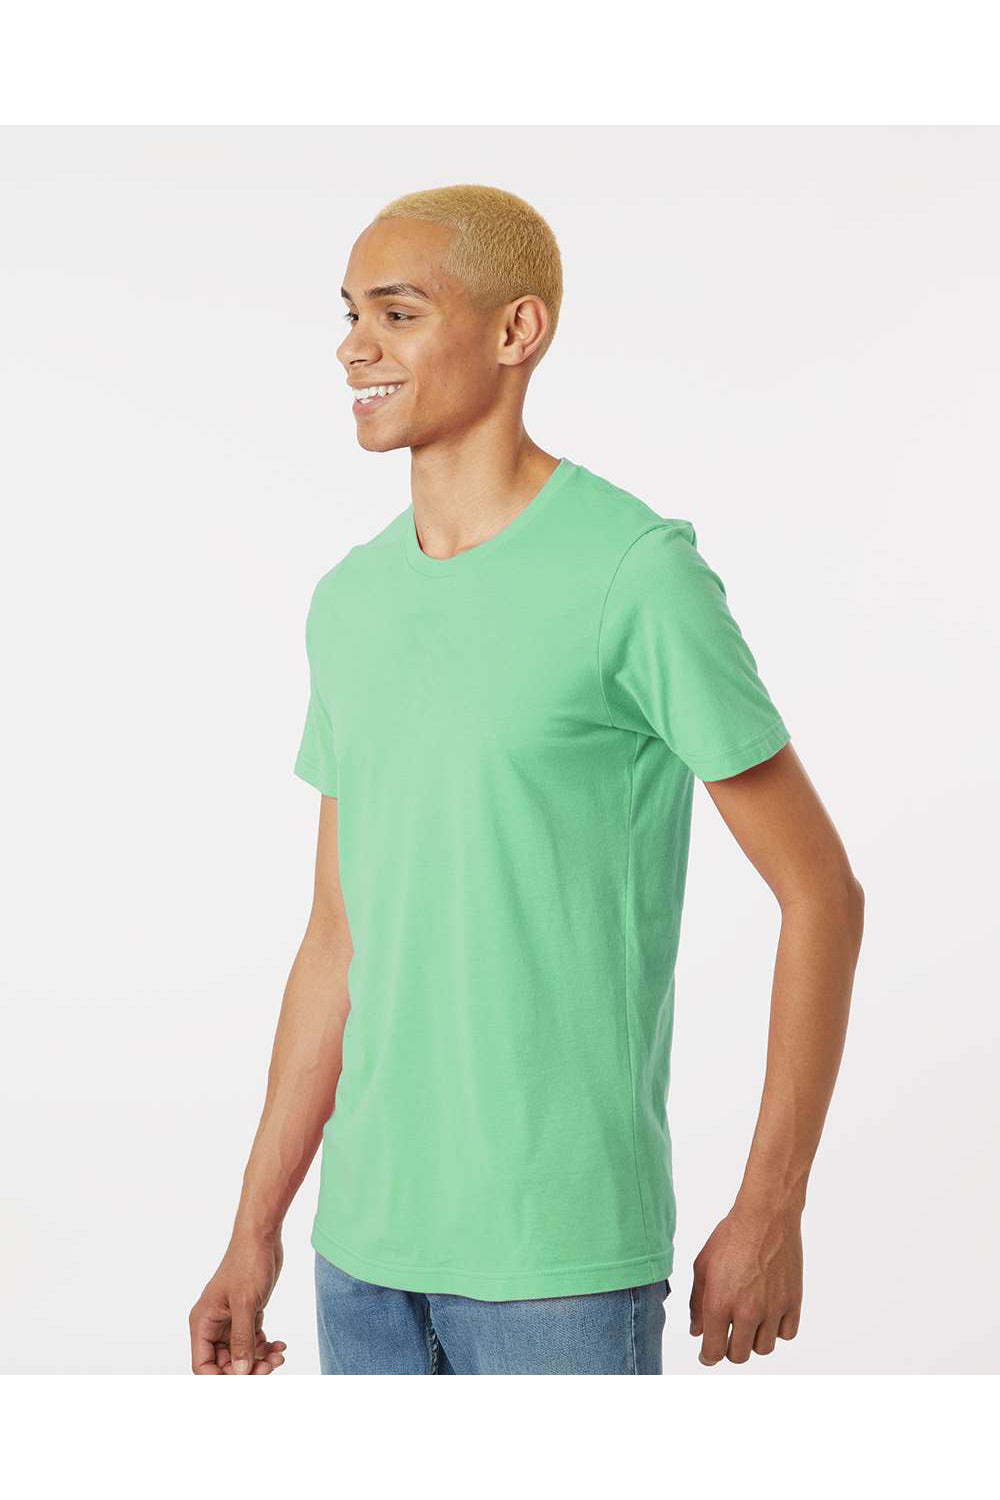 Tultex 602 Mens Short Sleeve Crewneck T-Shirt Light Mint Green Model Side